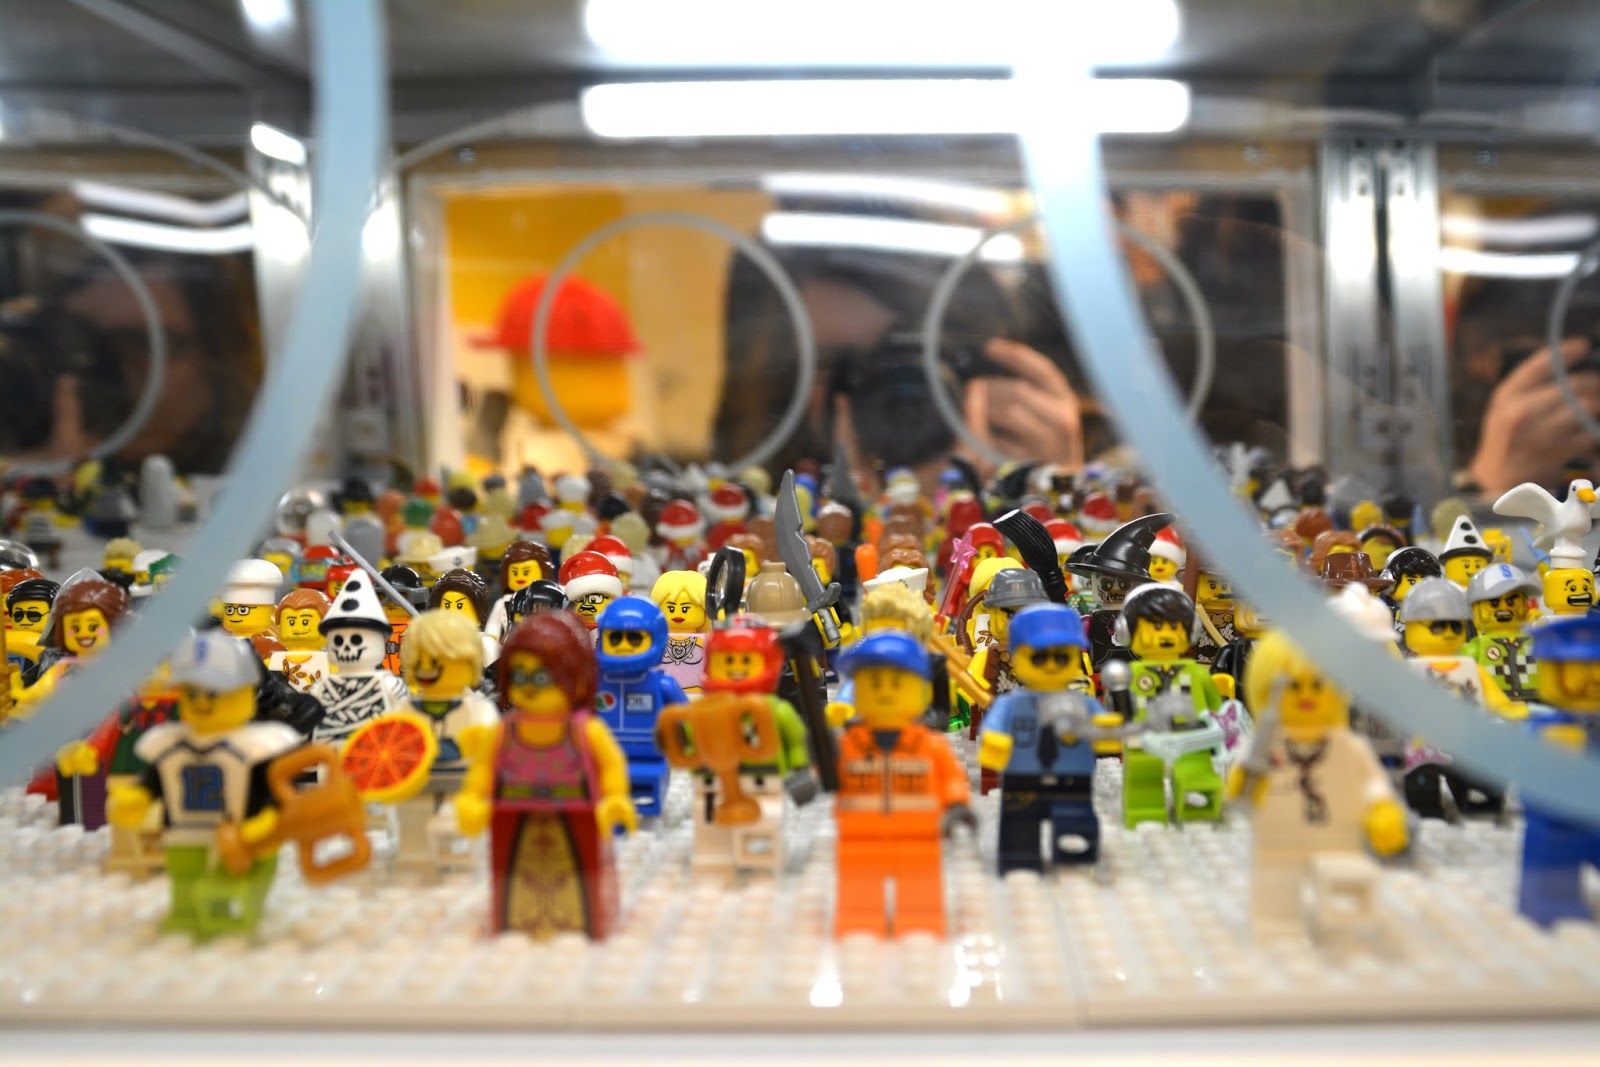 Lego Store Promenade Catherine / Autour de